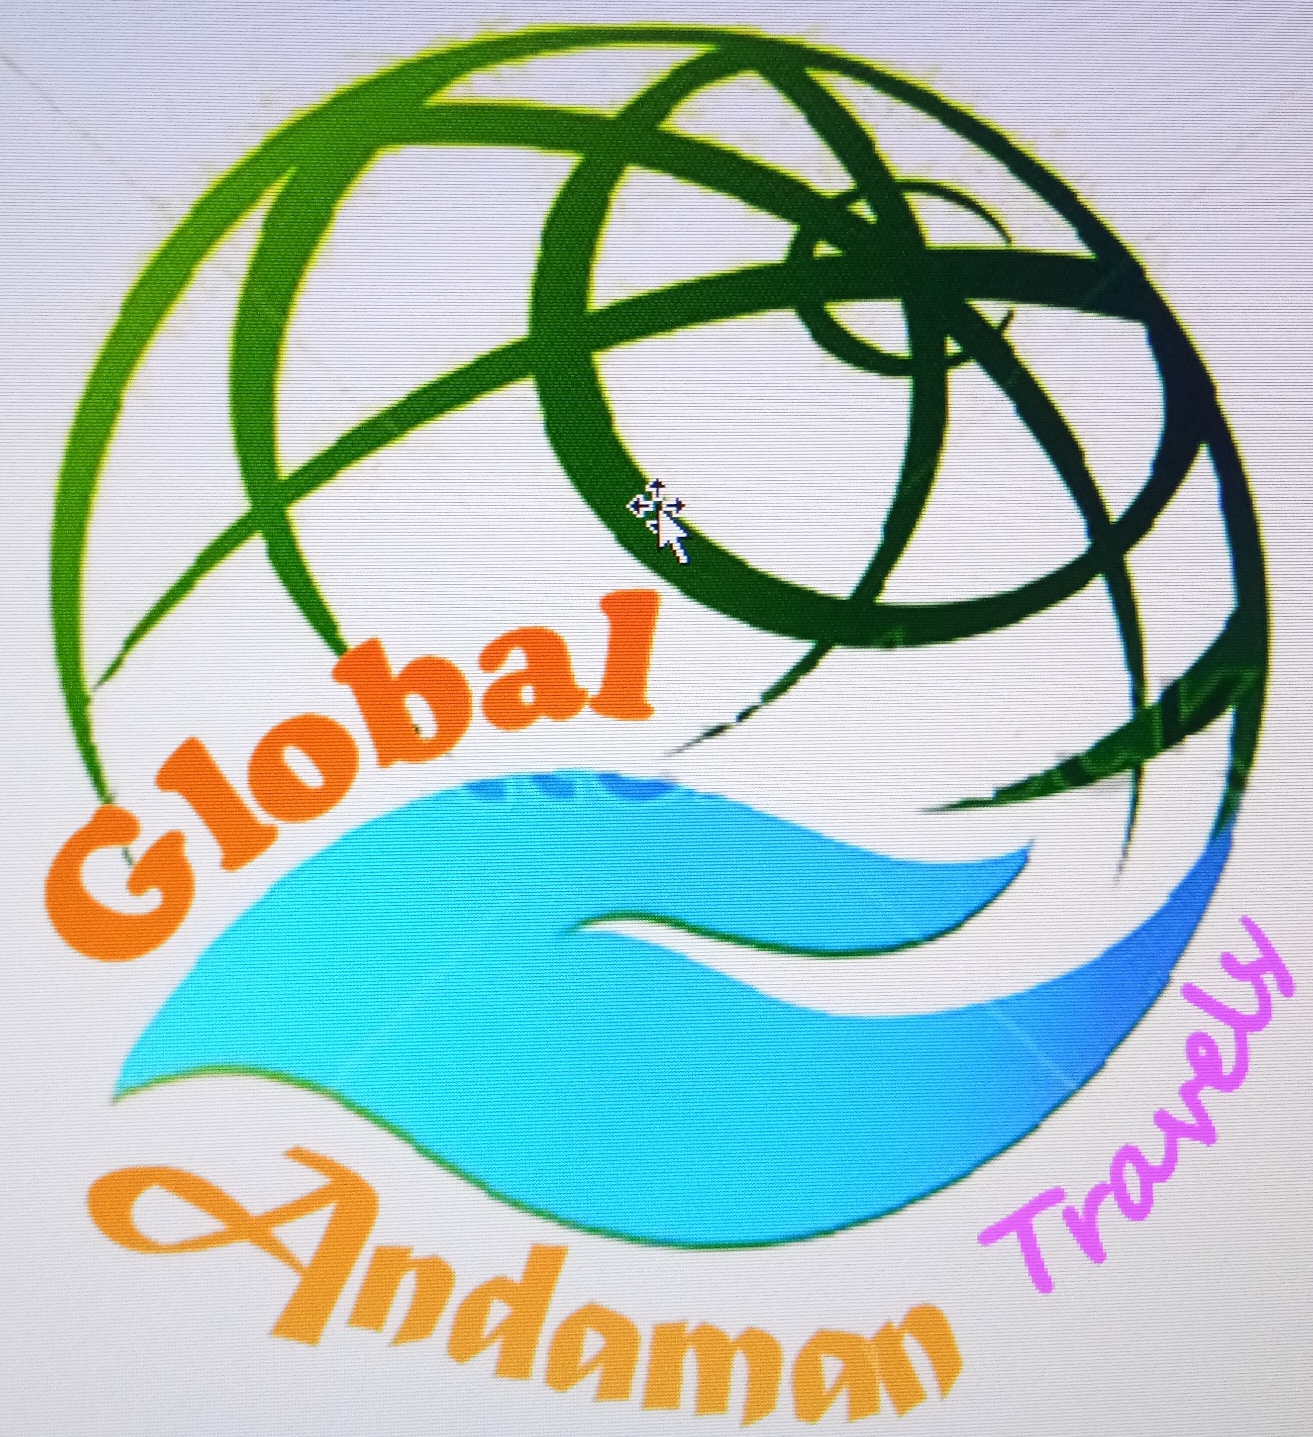 Global Andaman Tour & Travels